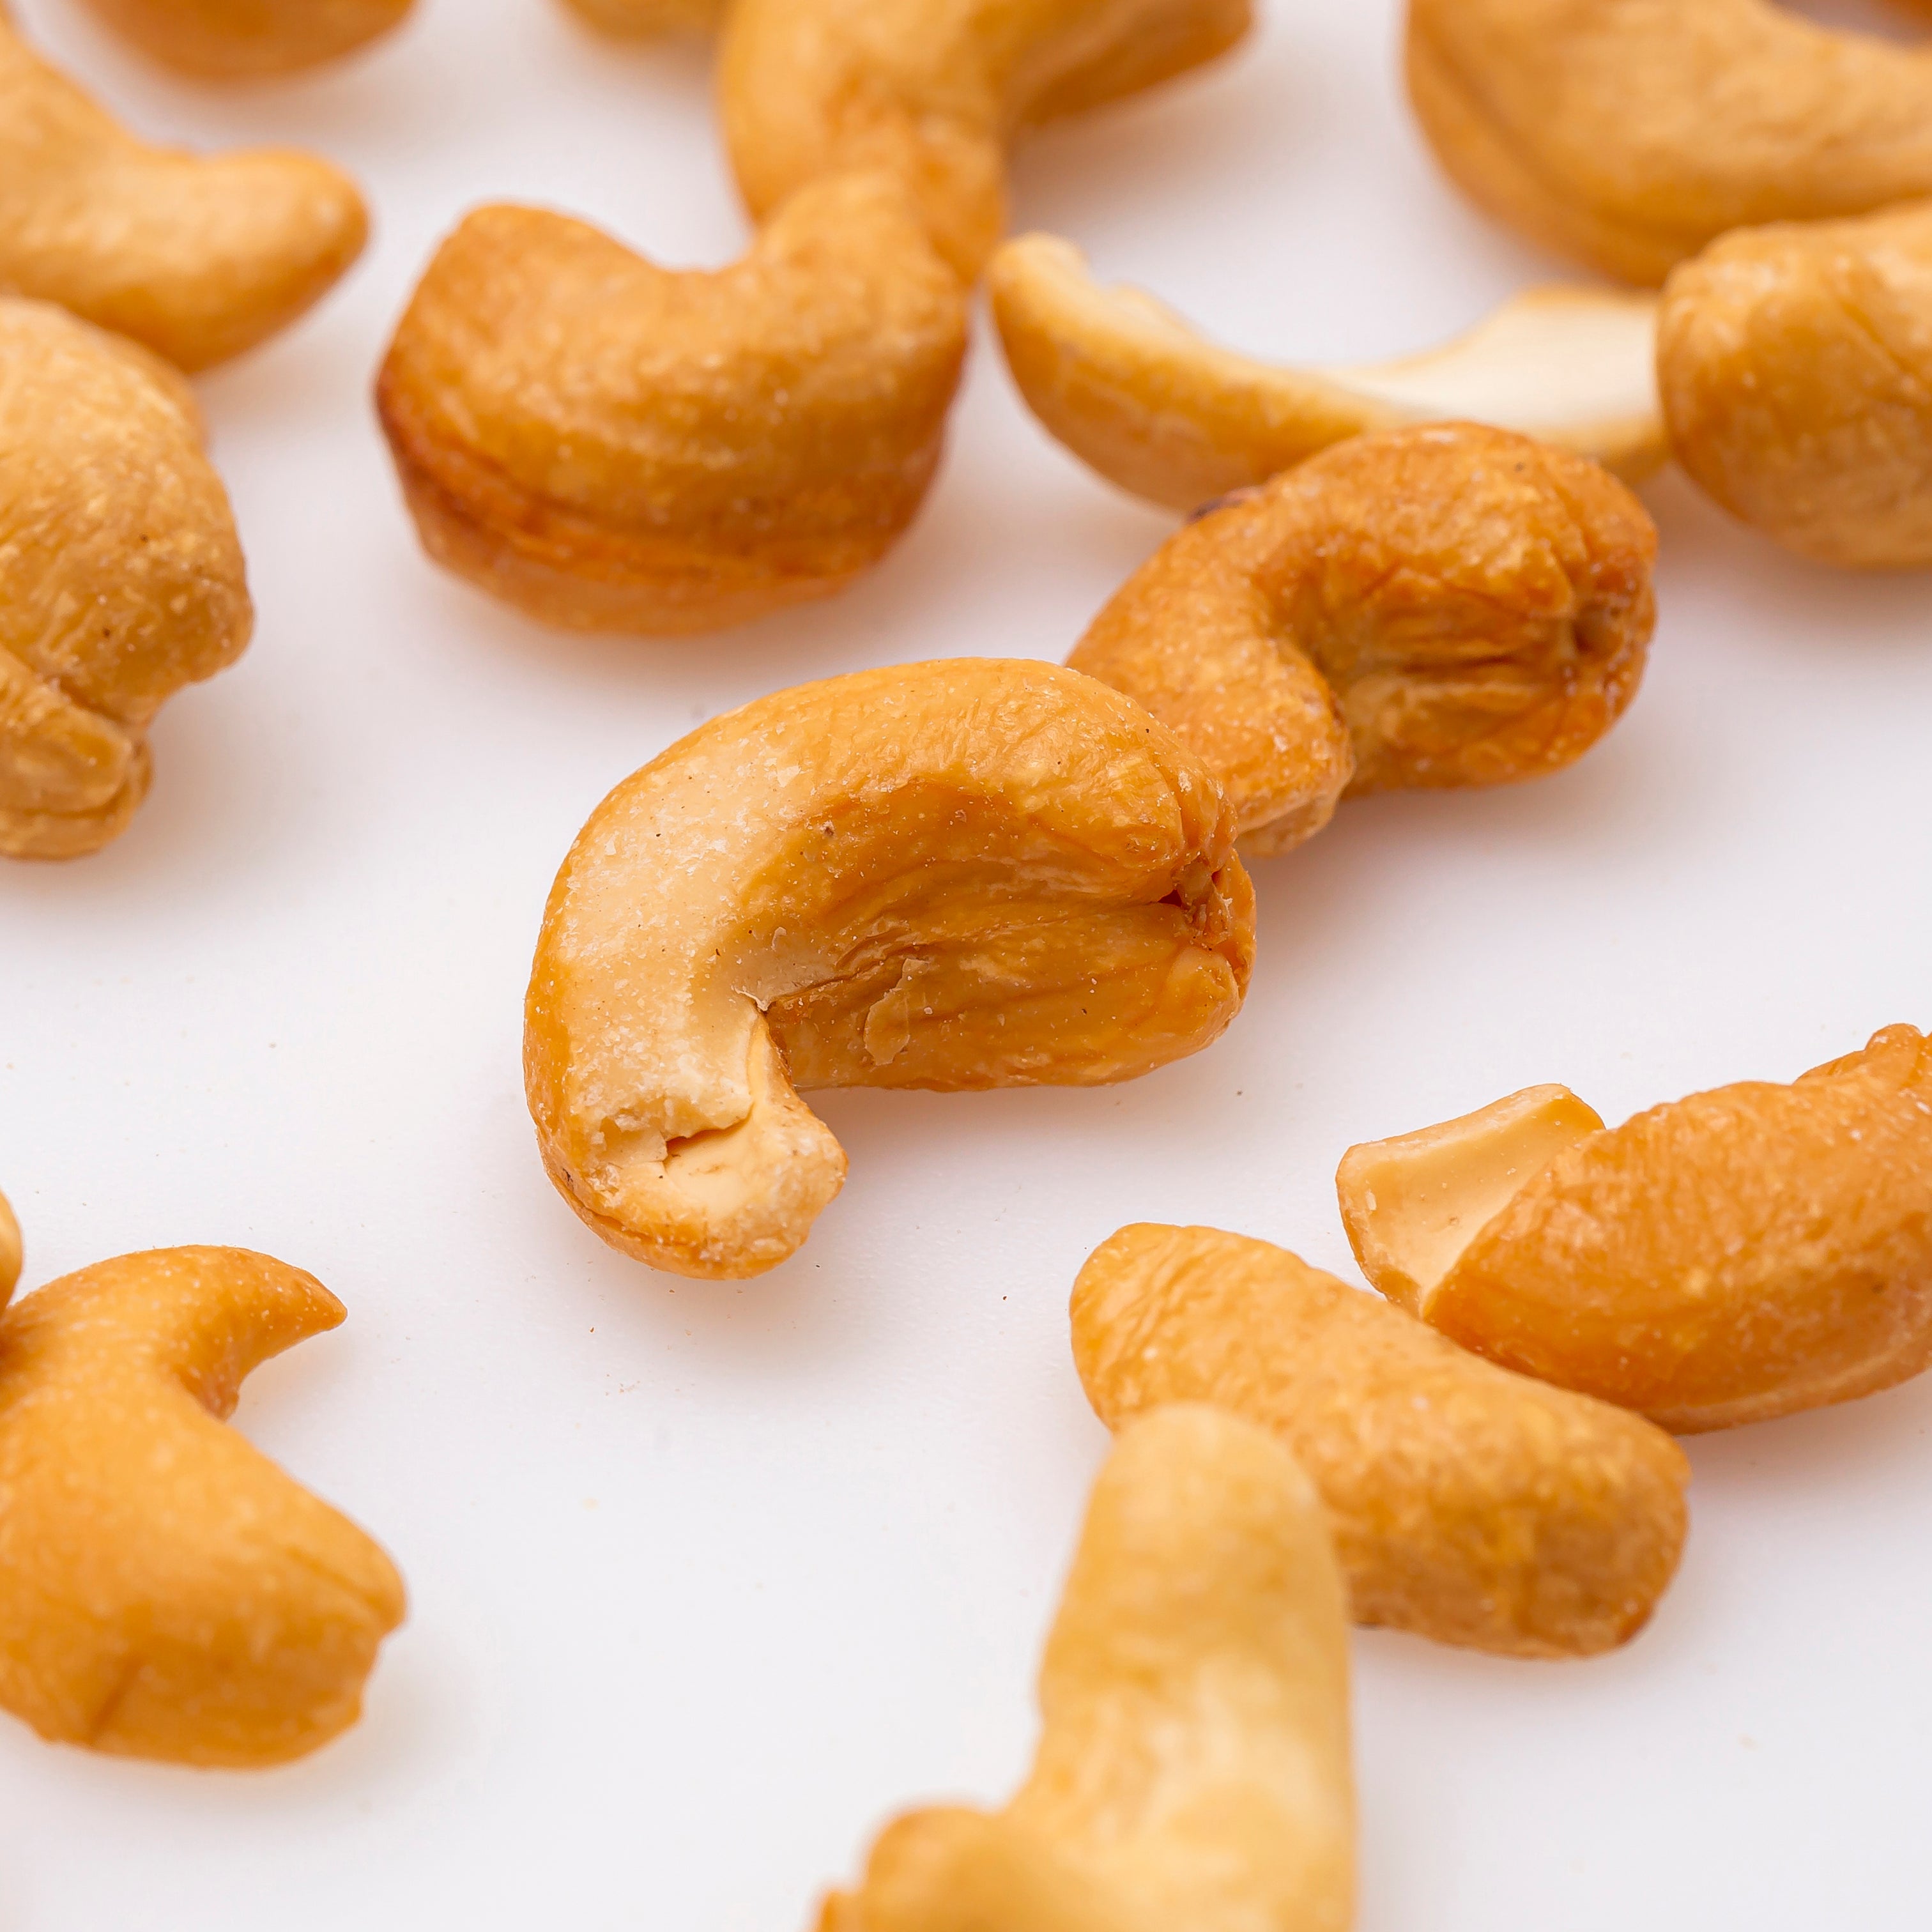 Roasted Salted Cashews (Roasted Nuts) Image 2 - Naked Foods